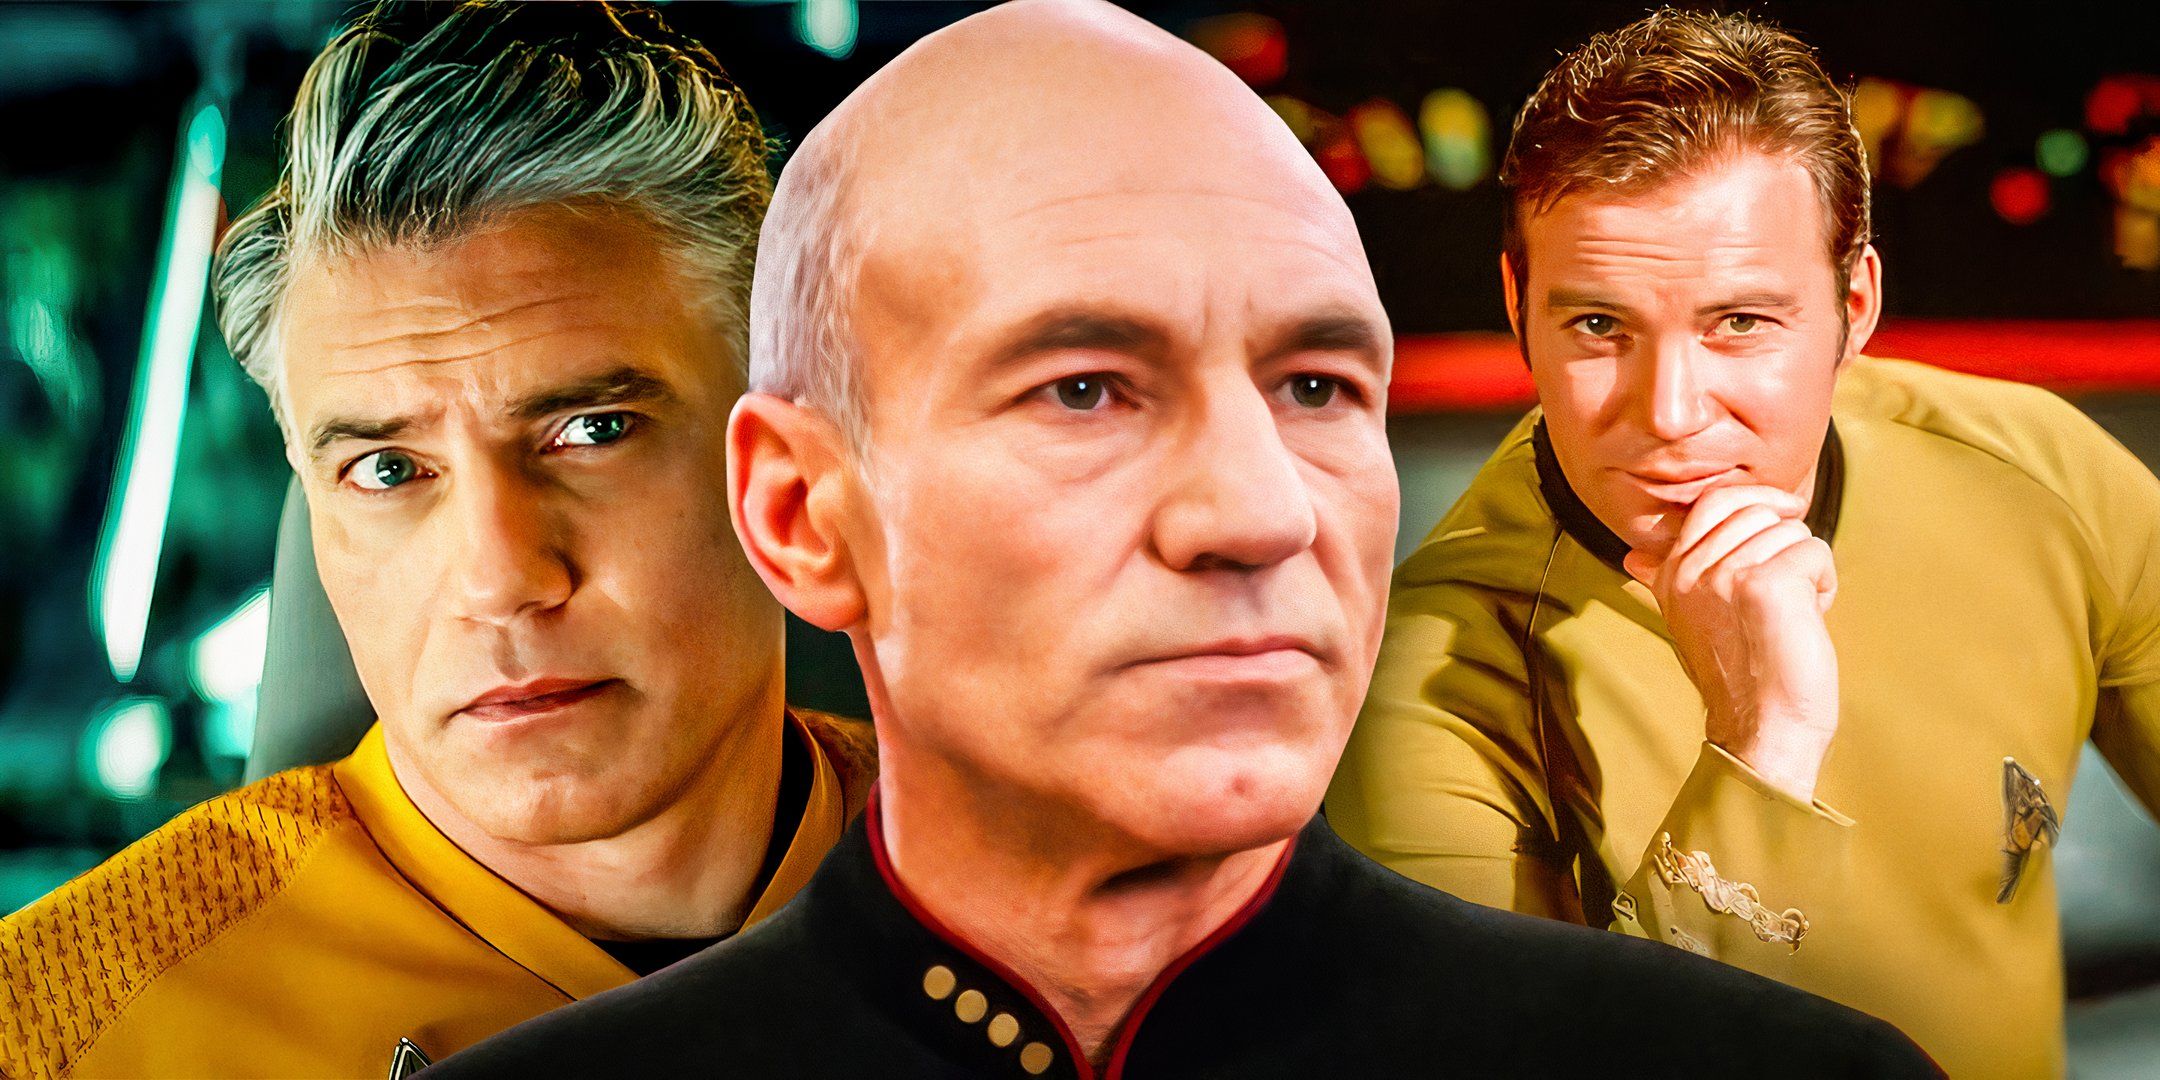 Captain Christopher Pike, Captain Jean-Luc Picard, and Captain James T. Kirk of Star Trek.